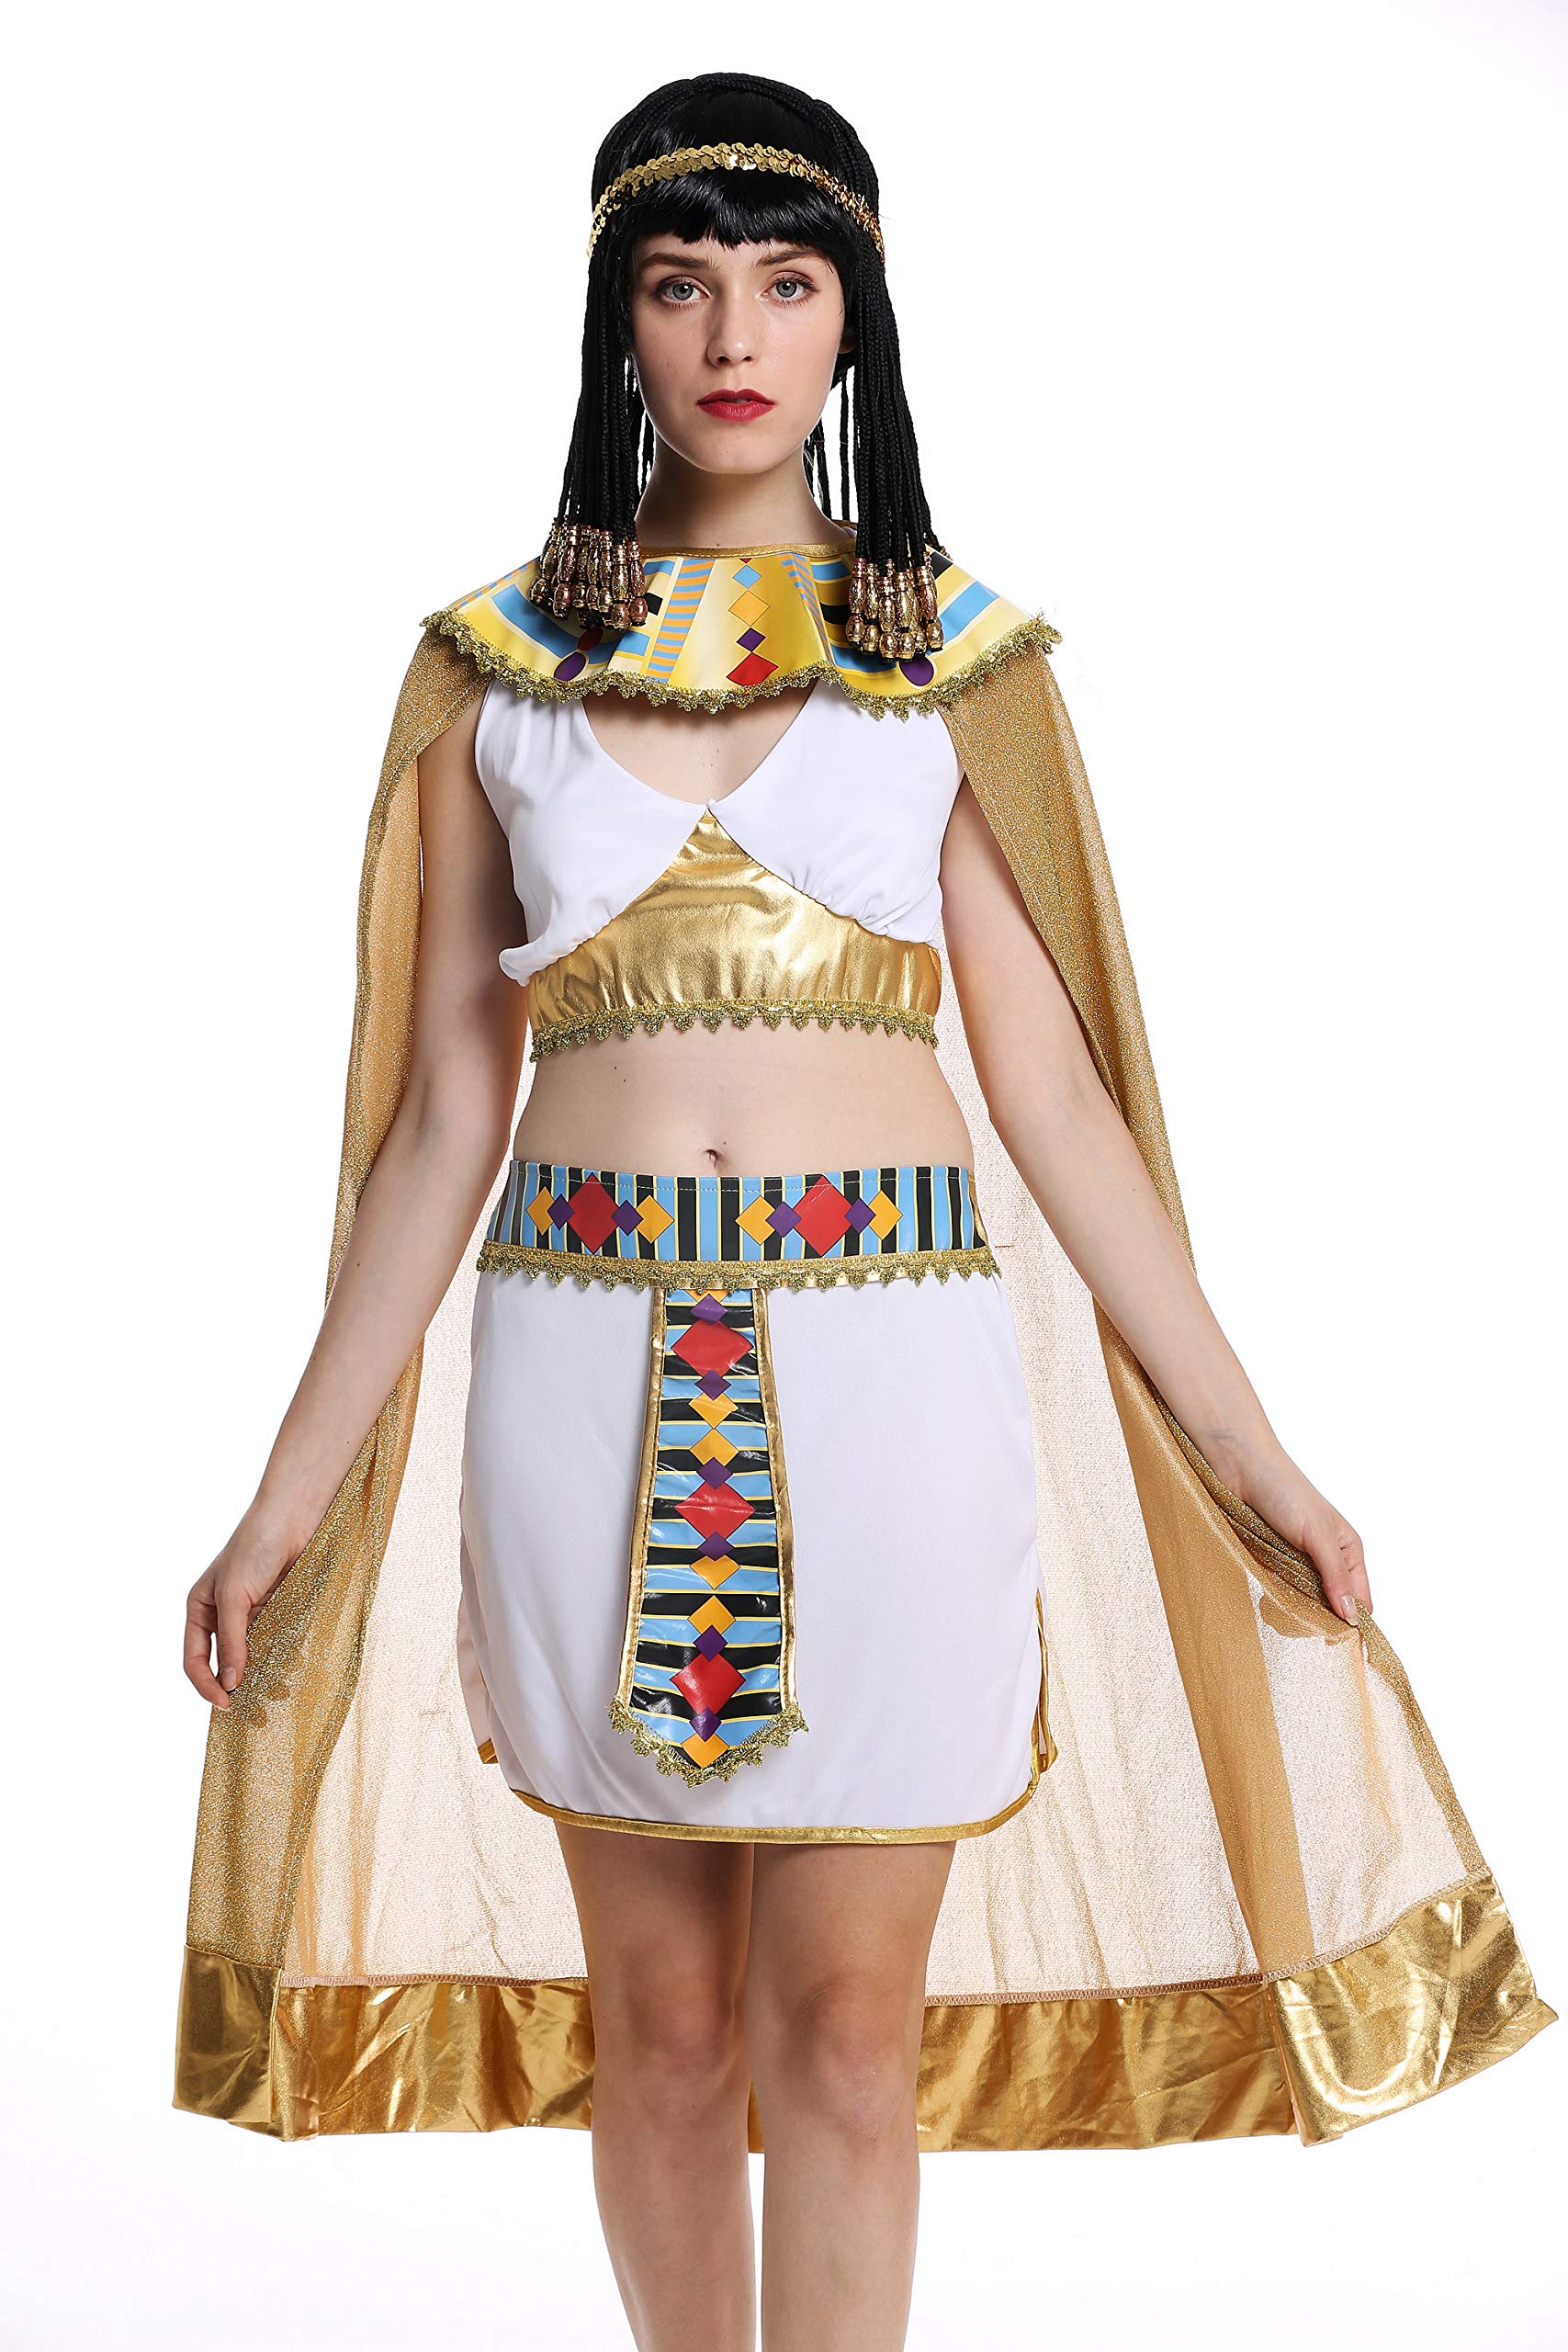 dressmeup W-0199 Kostüm Damen Frauen Karneval Halloween Ägypterin Kleopatra Cleopatra Pharaonin weiß S